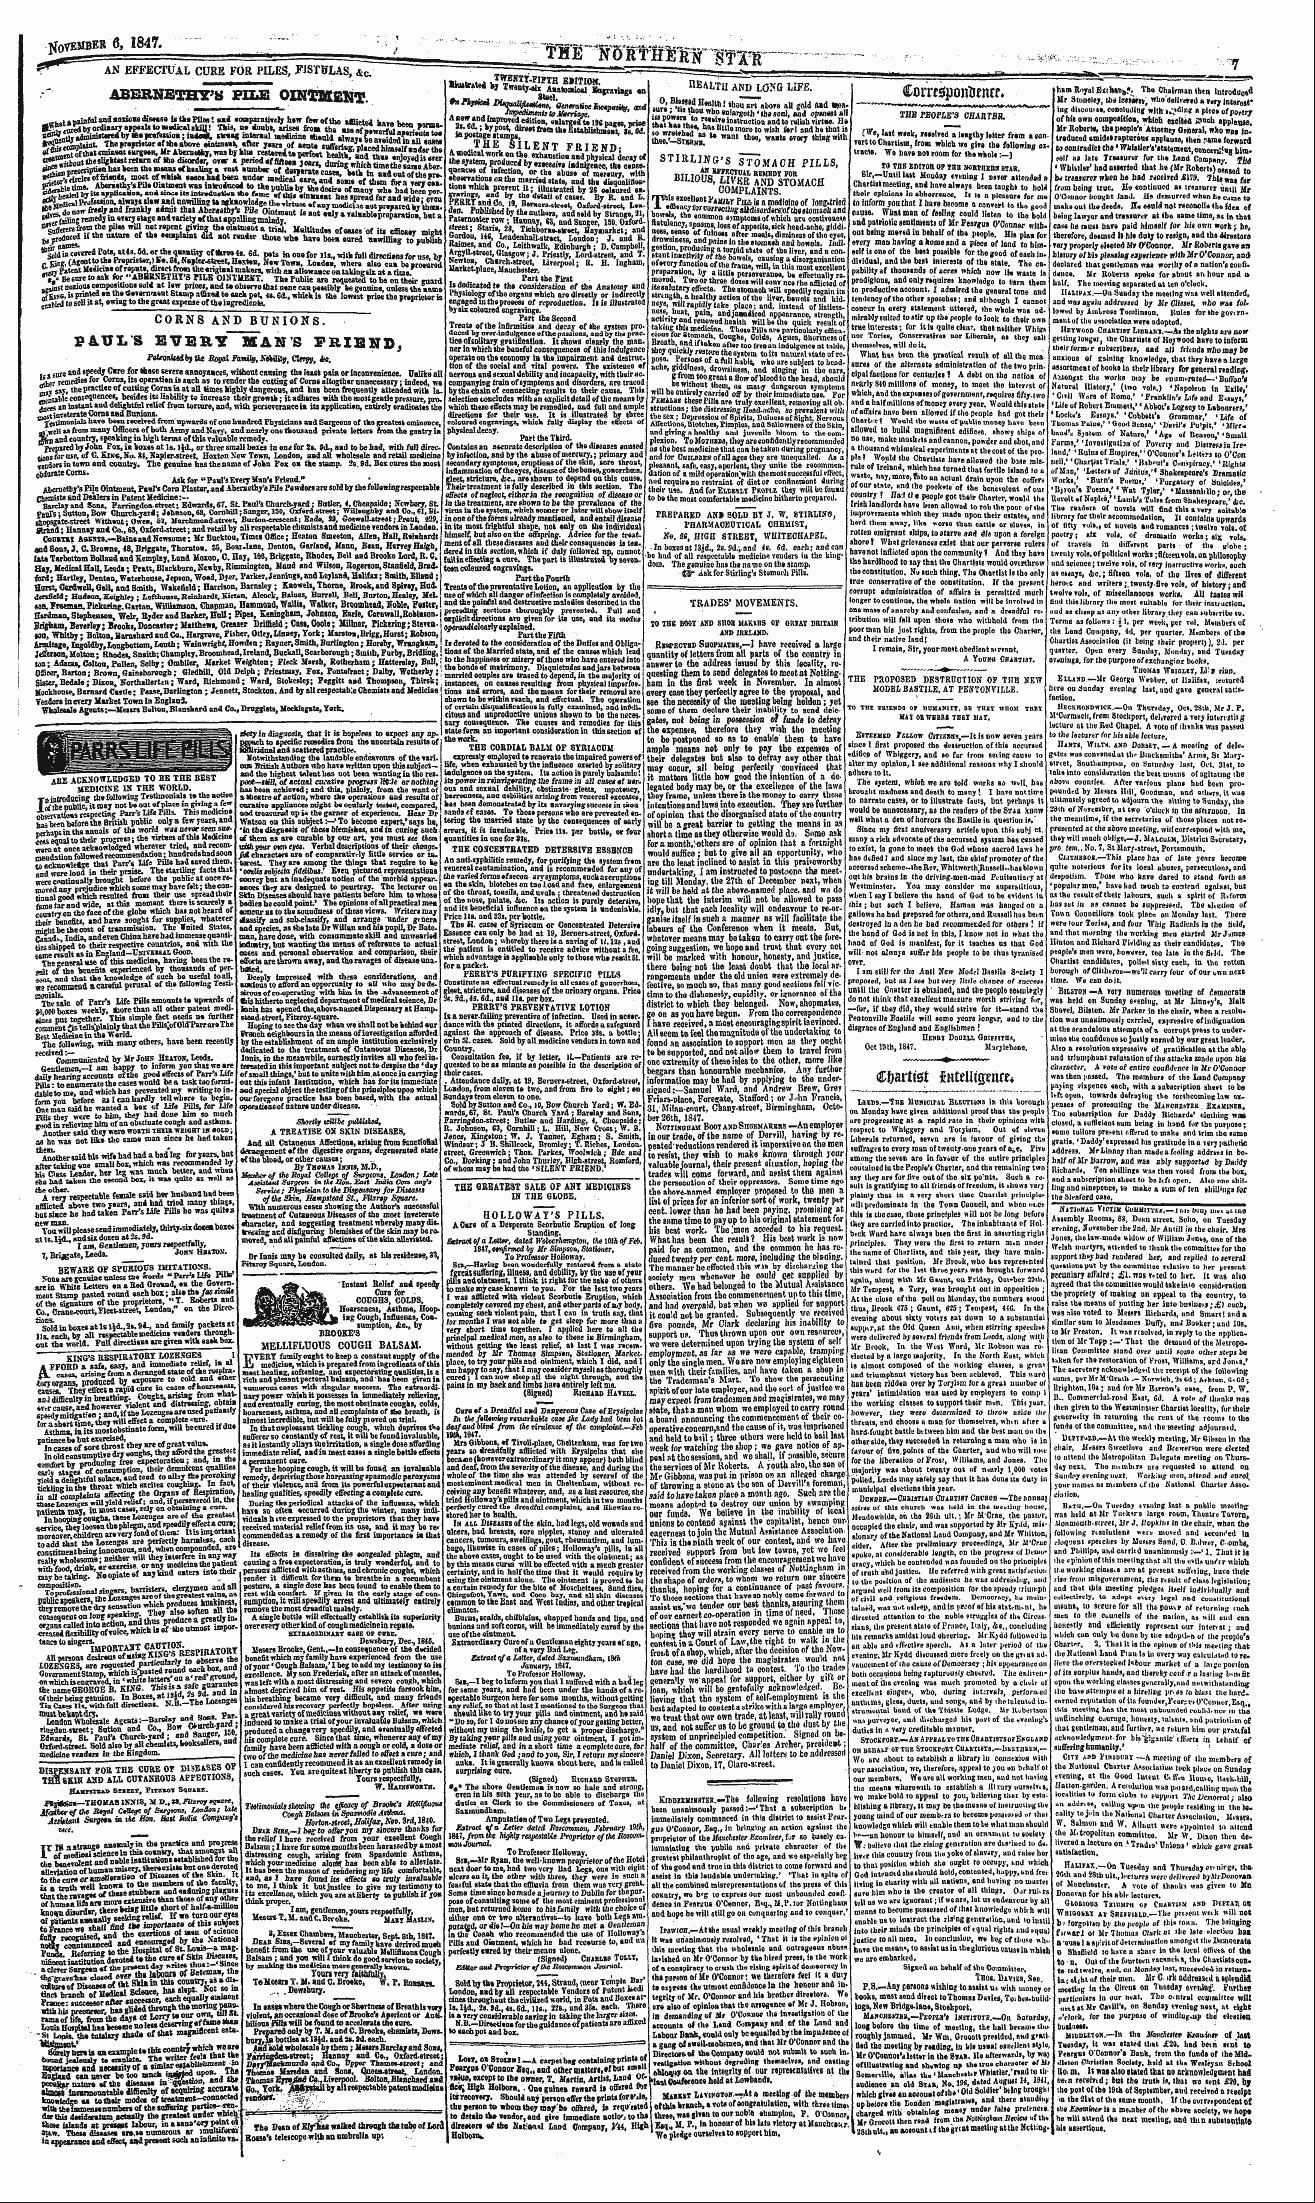 Northern Star (1837-1852): jS F Y, 3rd edition - Ad00715